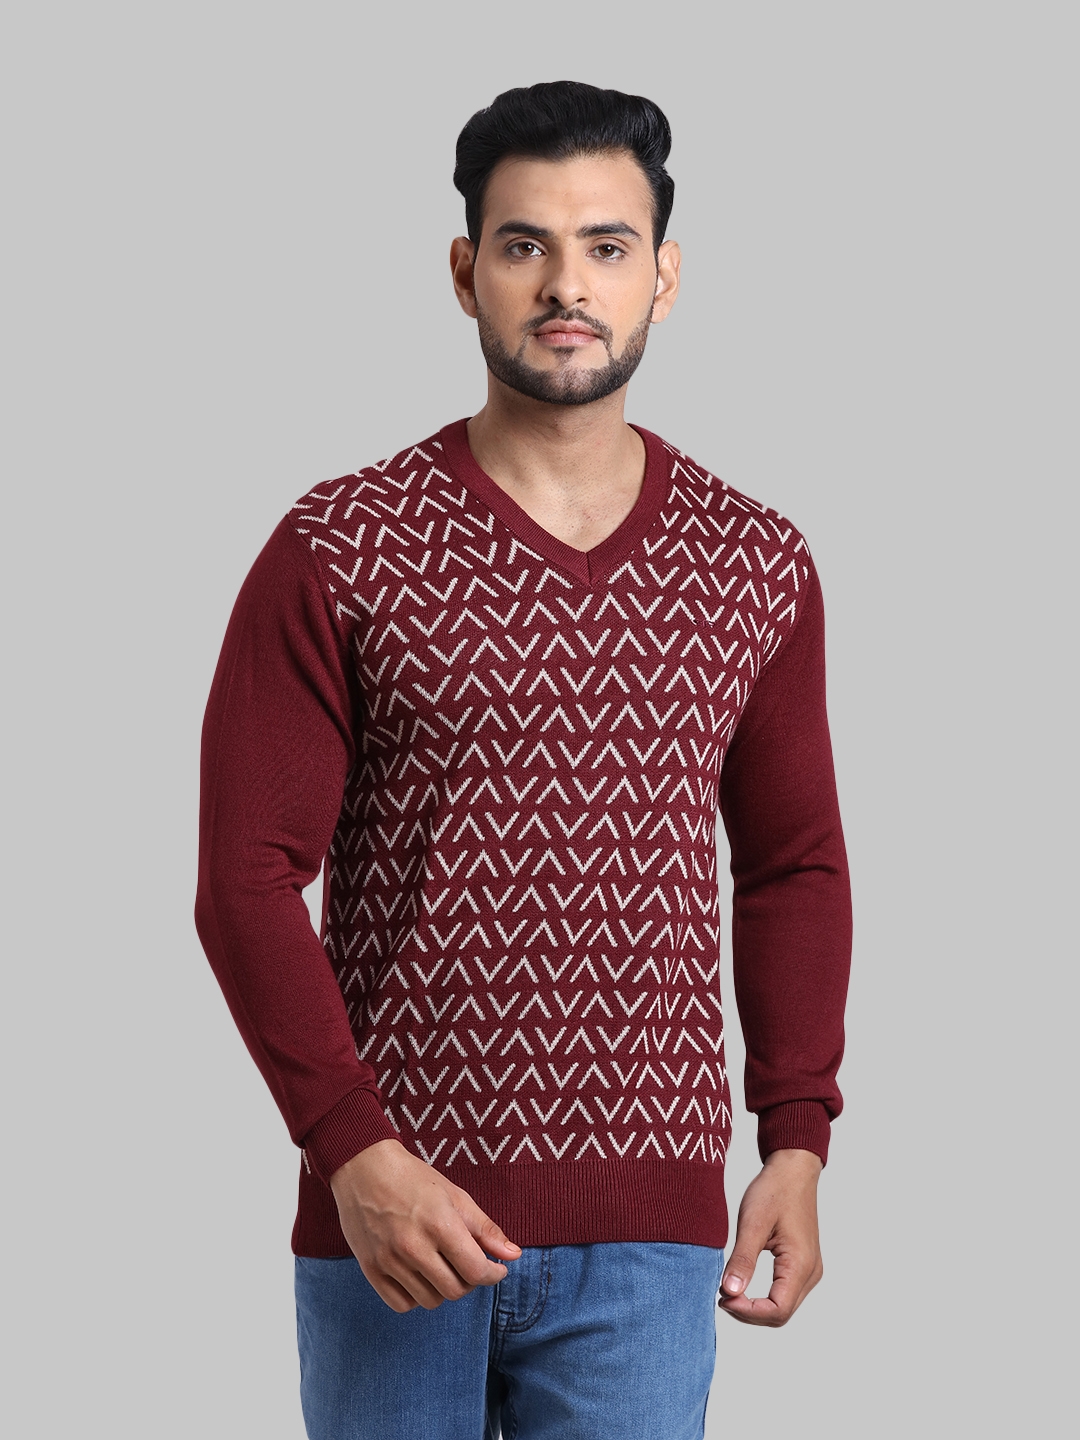 ColorPlus Dark Maroon Sweater